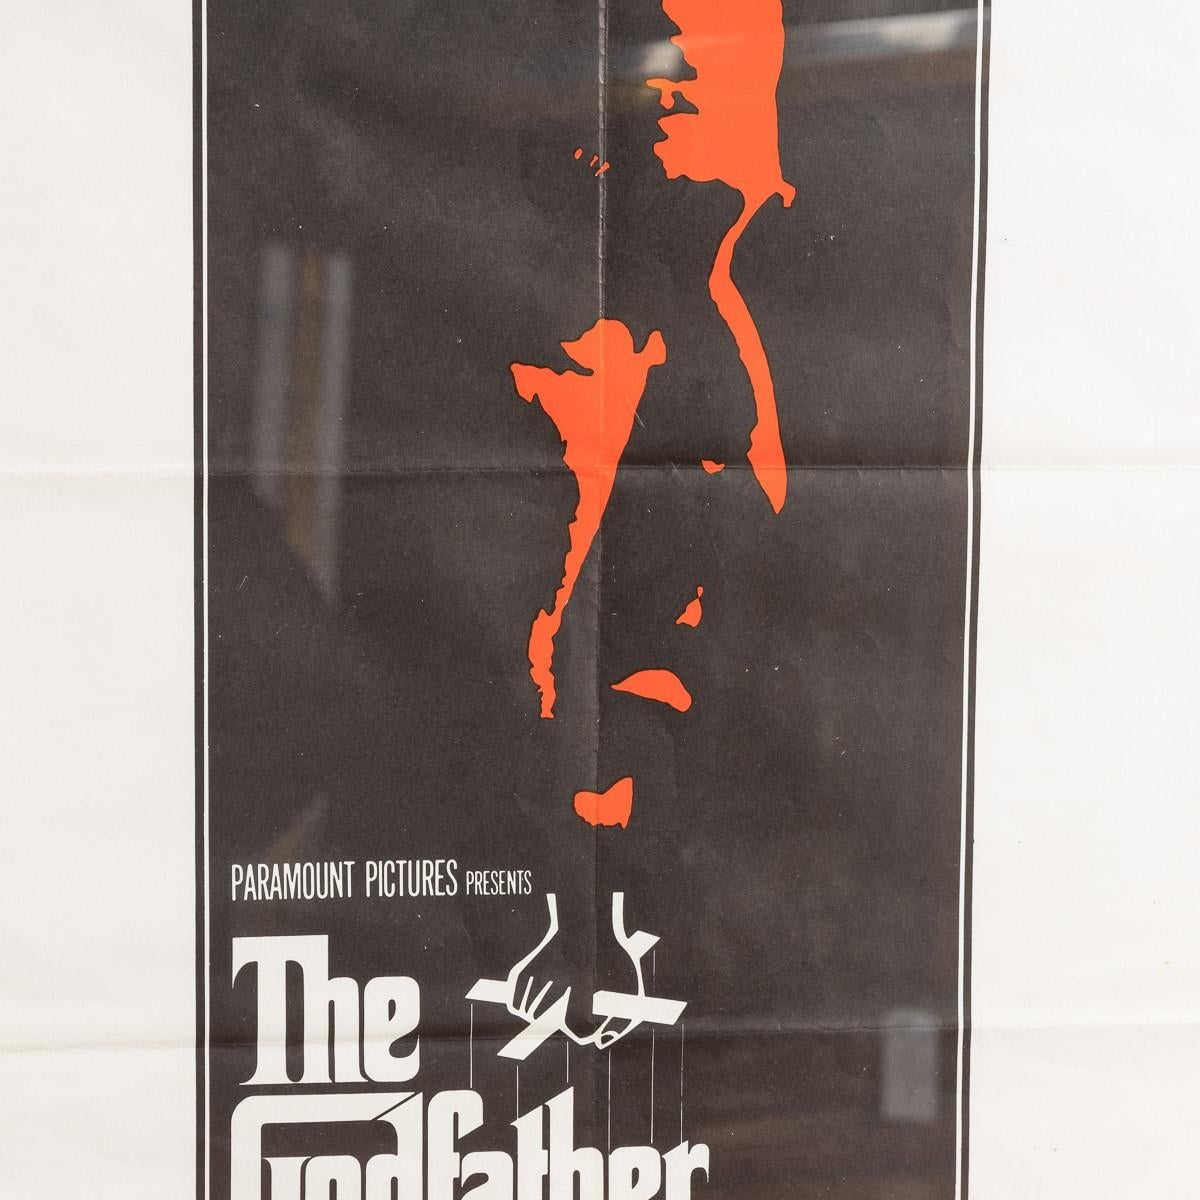 Paint A Framed Original Godfather Movie Poster, c.1972 For Sale